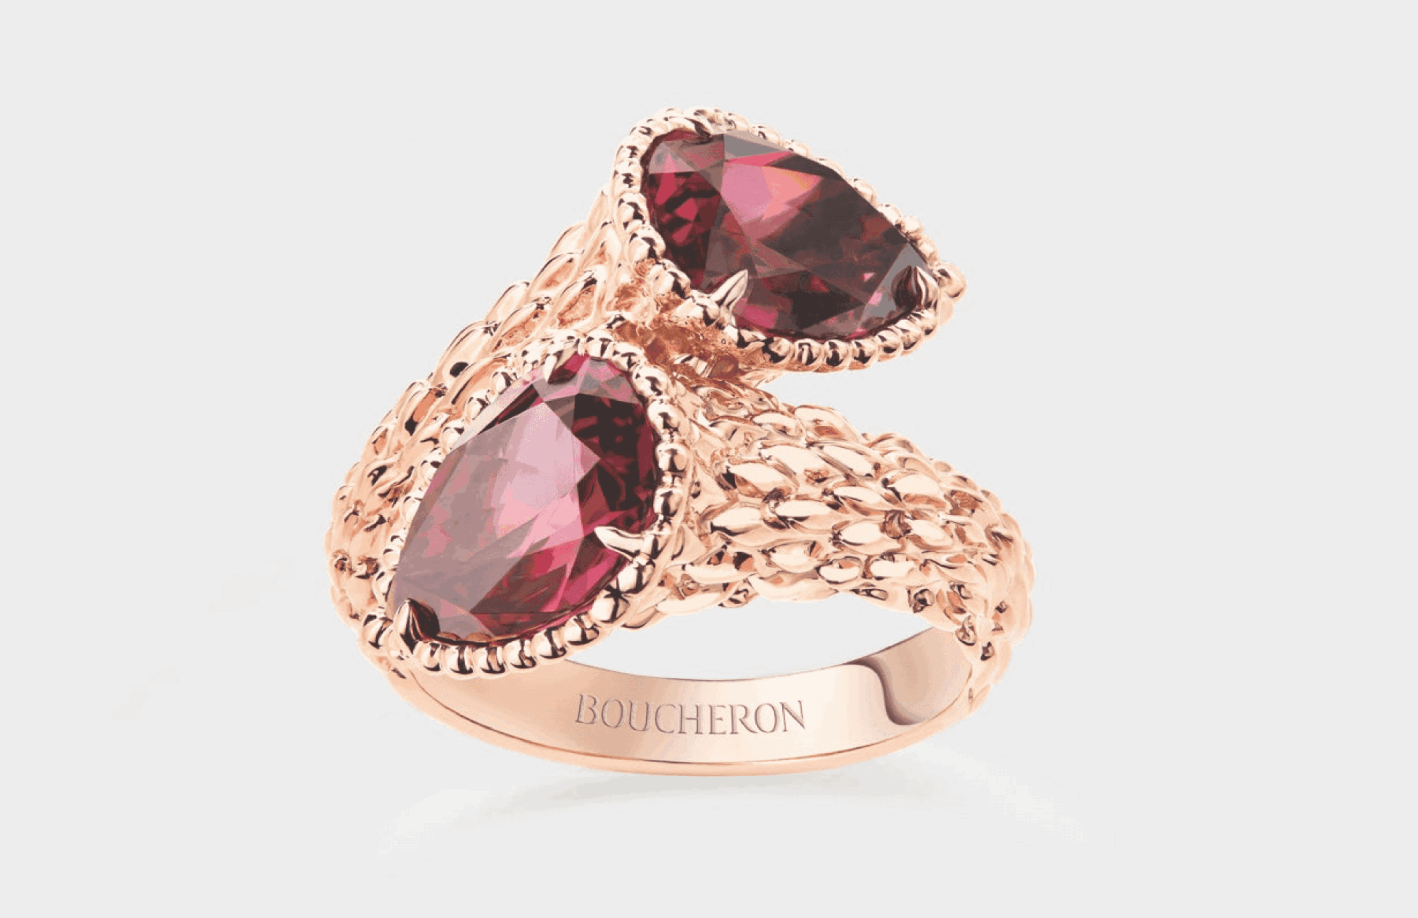 Boucheron's iconic Serpent Bohème ring